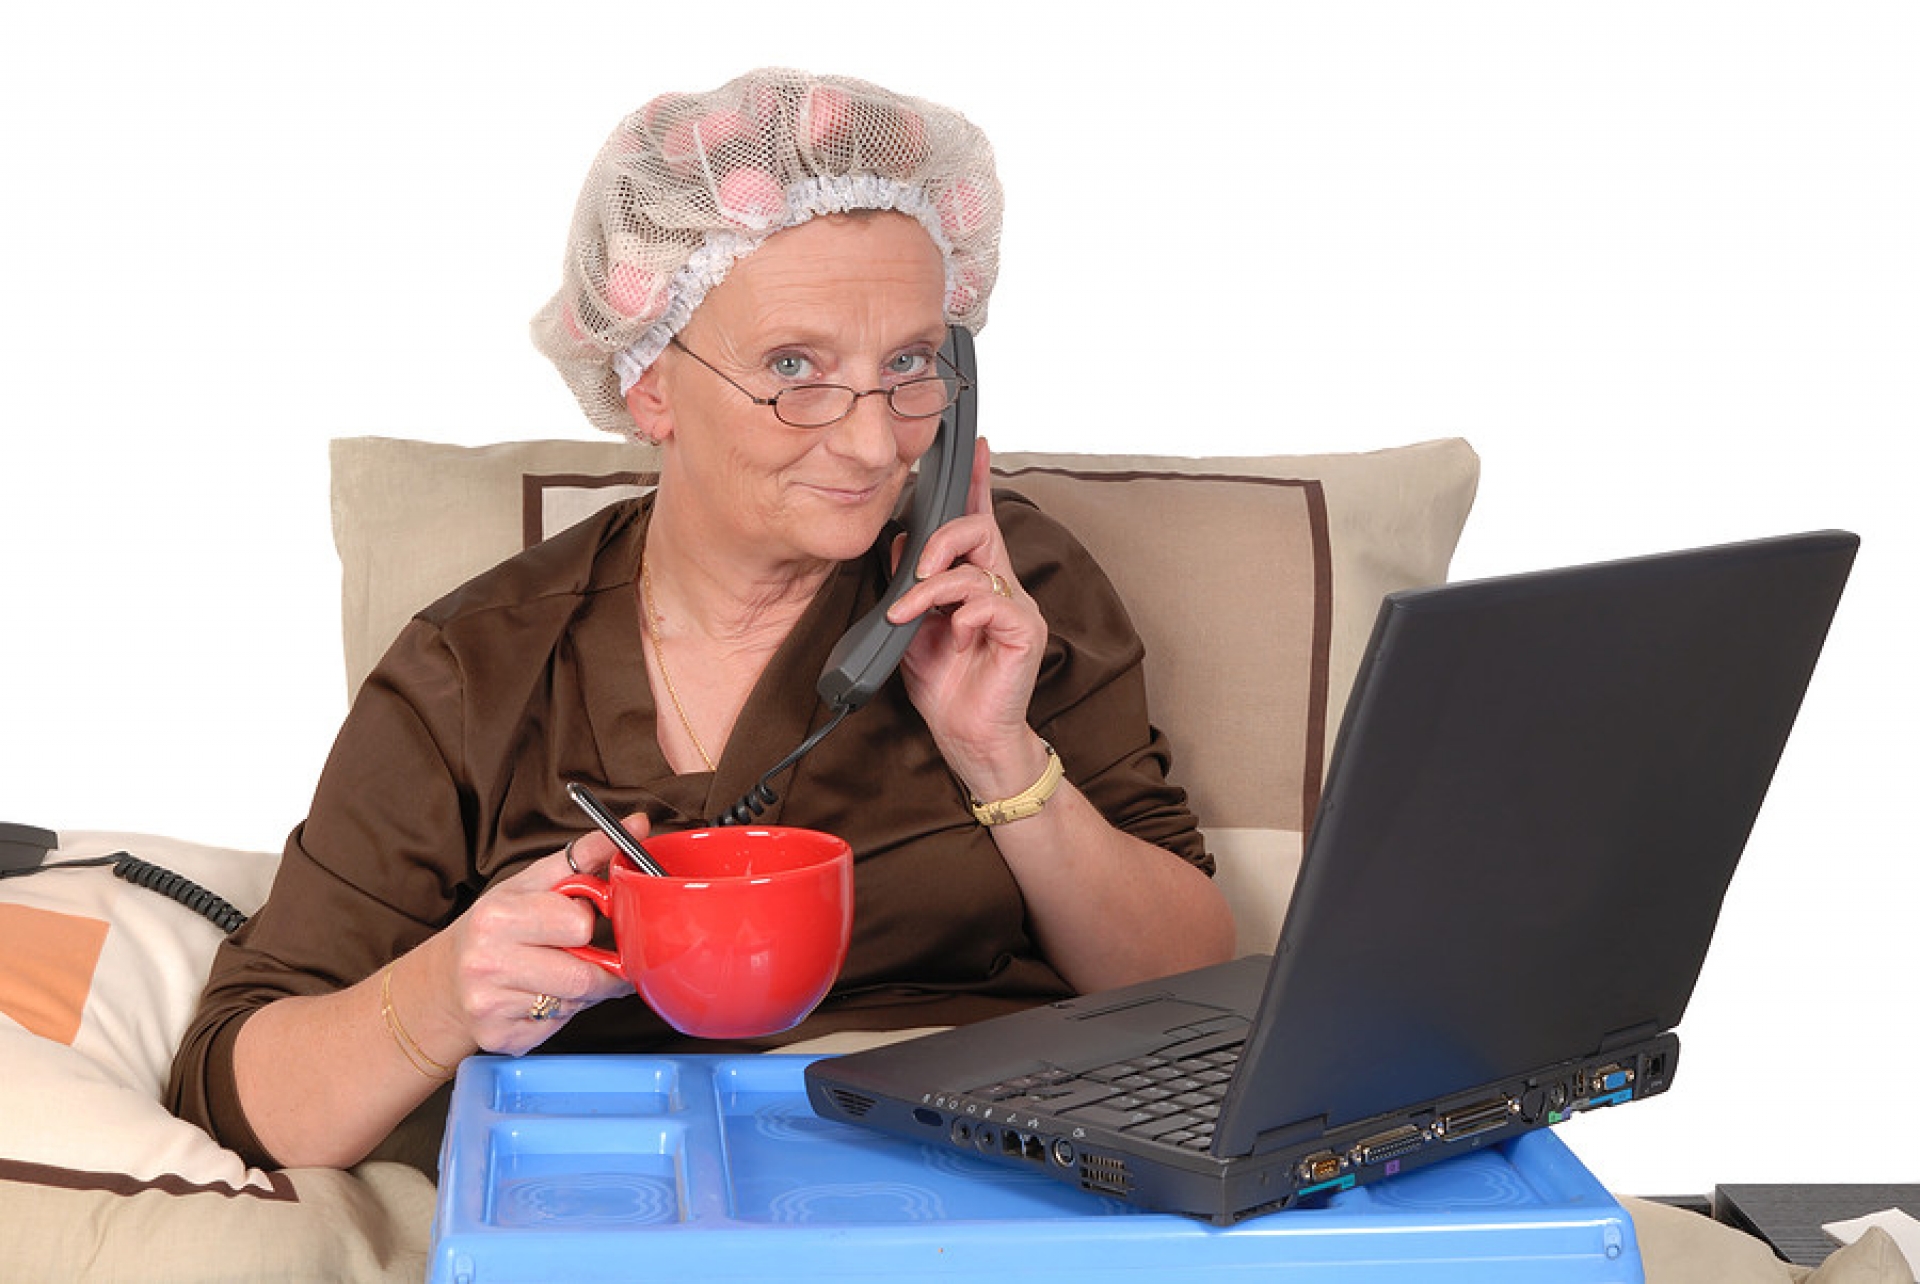 Зайти теток. Бабушка и компьютер. Бабушка на работе. Бабка с ноутбуком. Женщина в возрасте за компьютером.